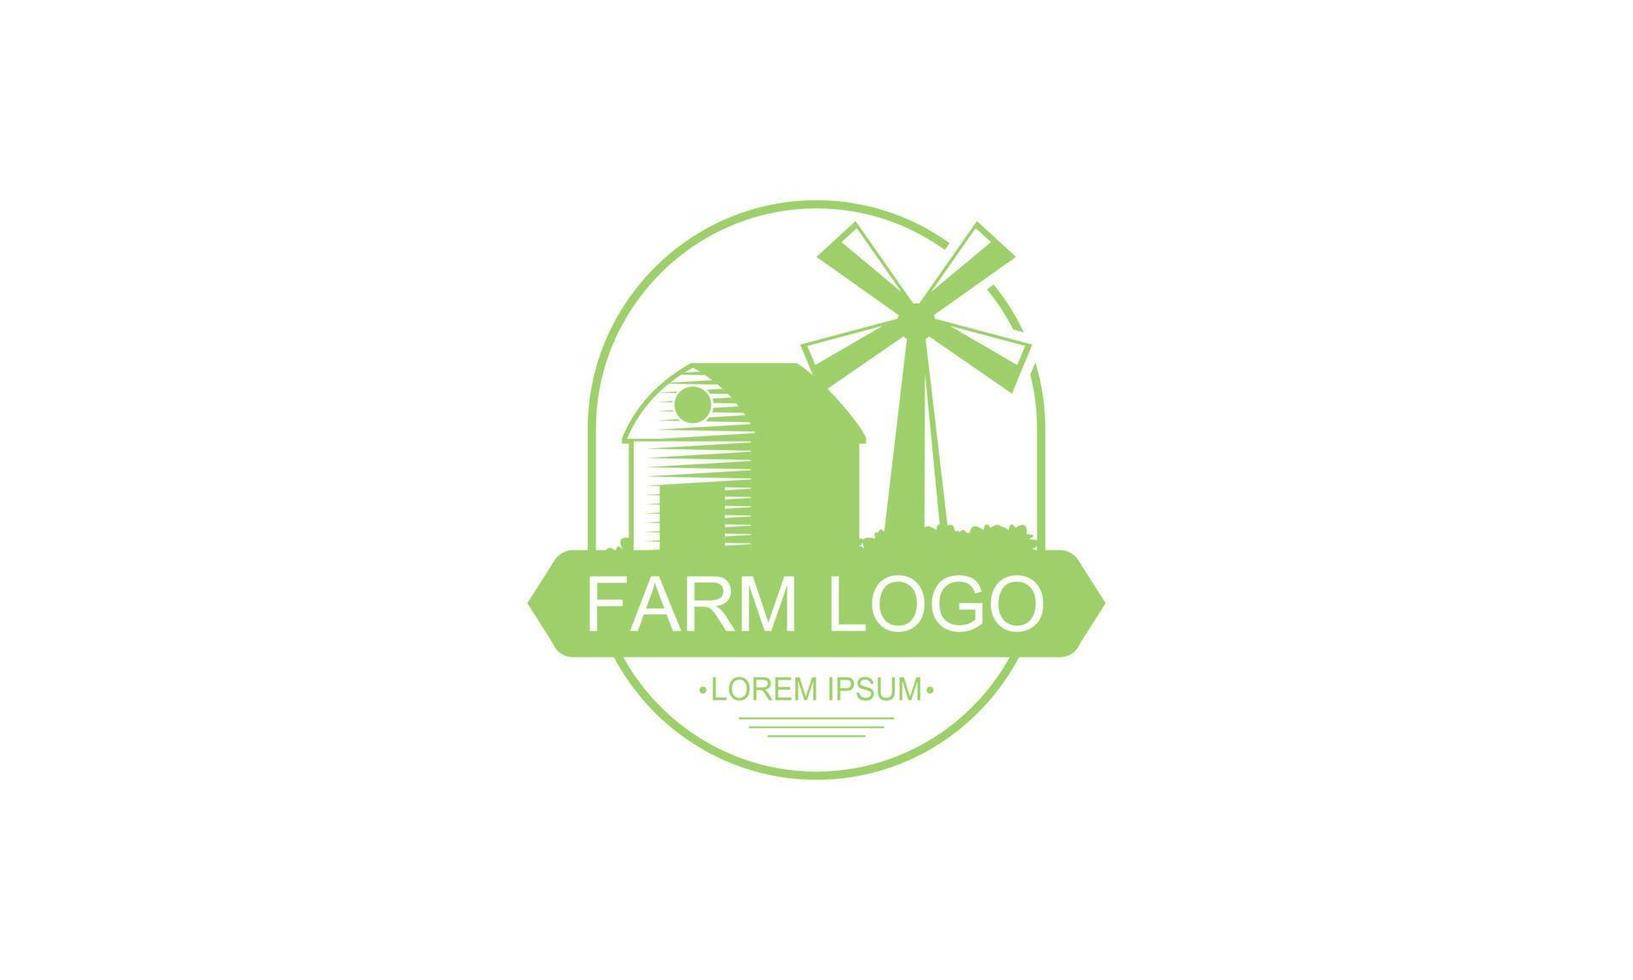 Illustration farm color logo in vintage style vector